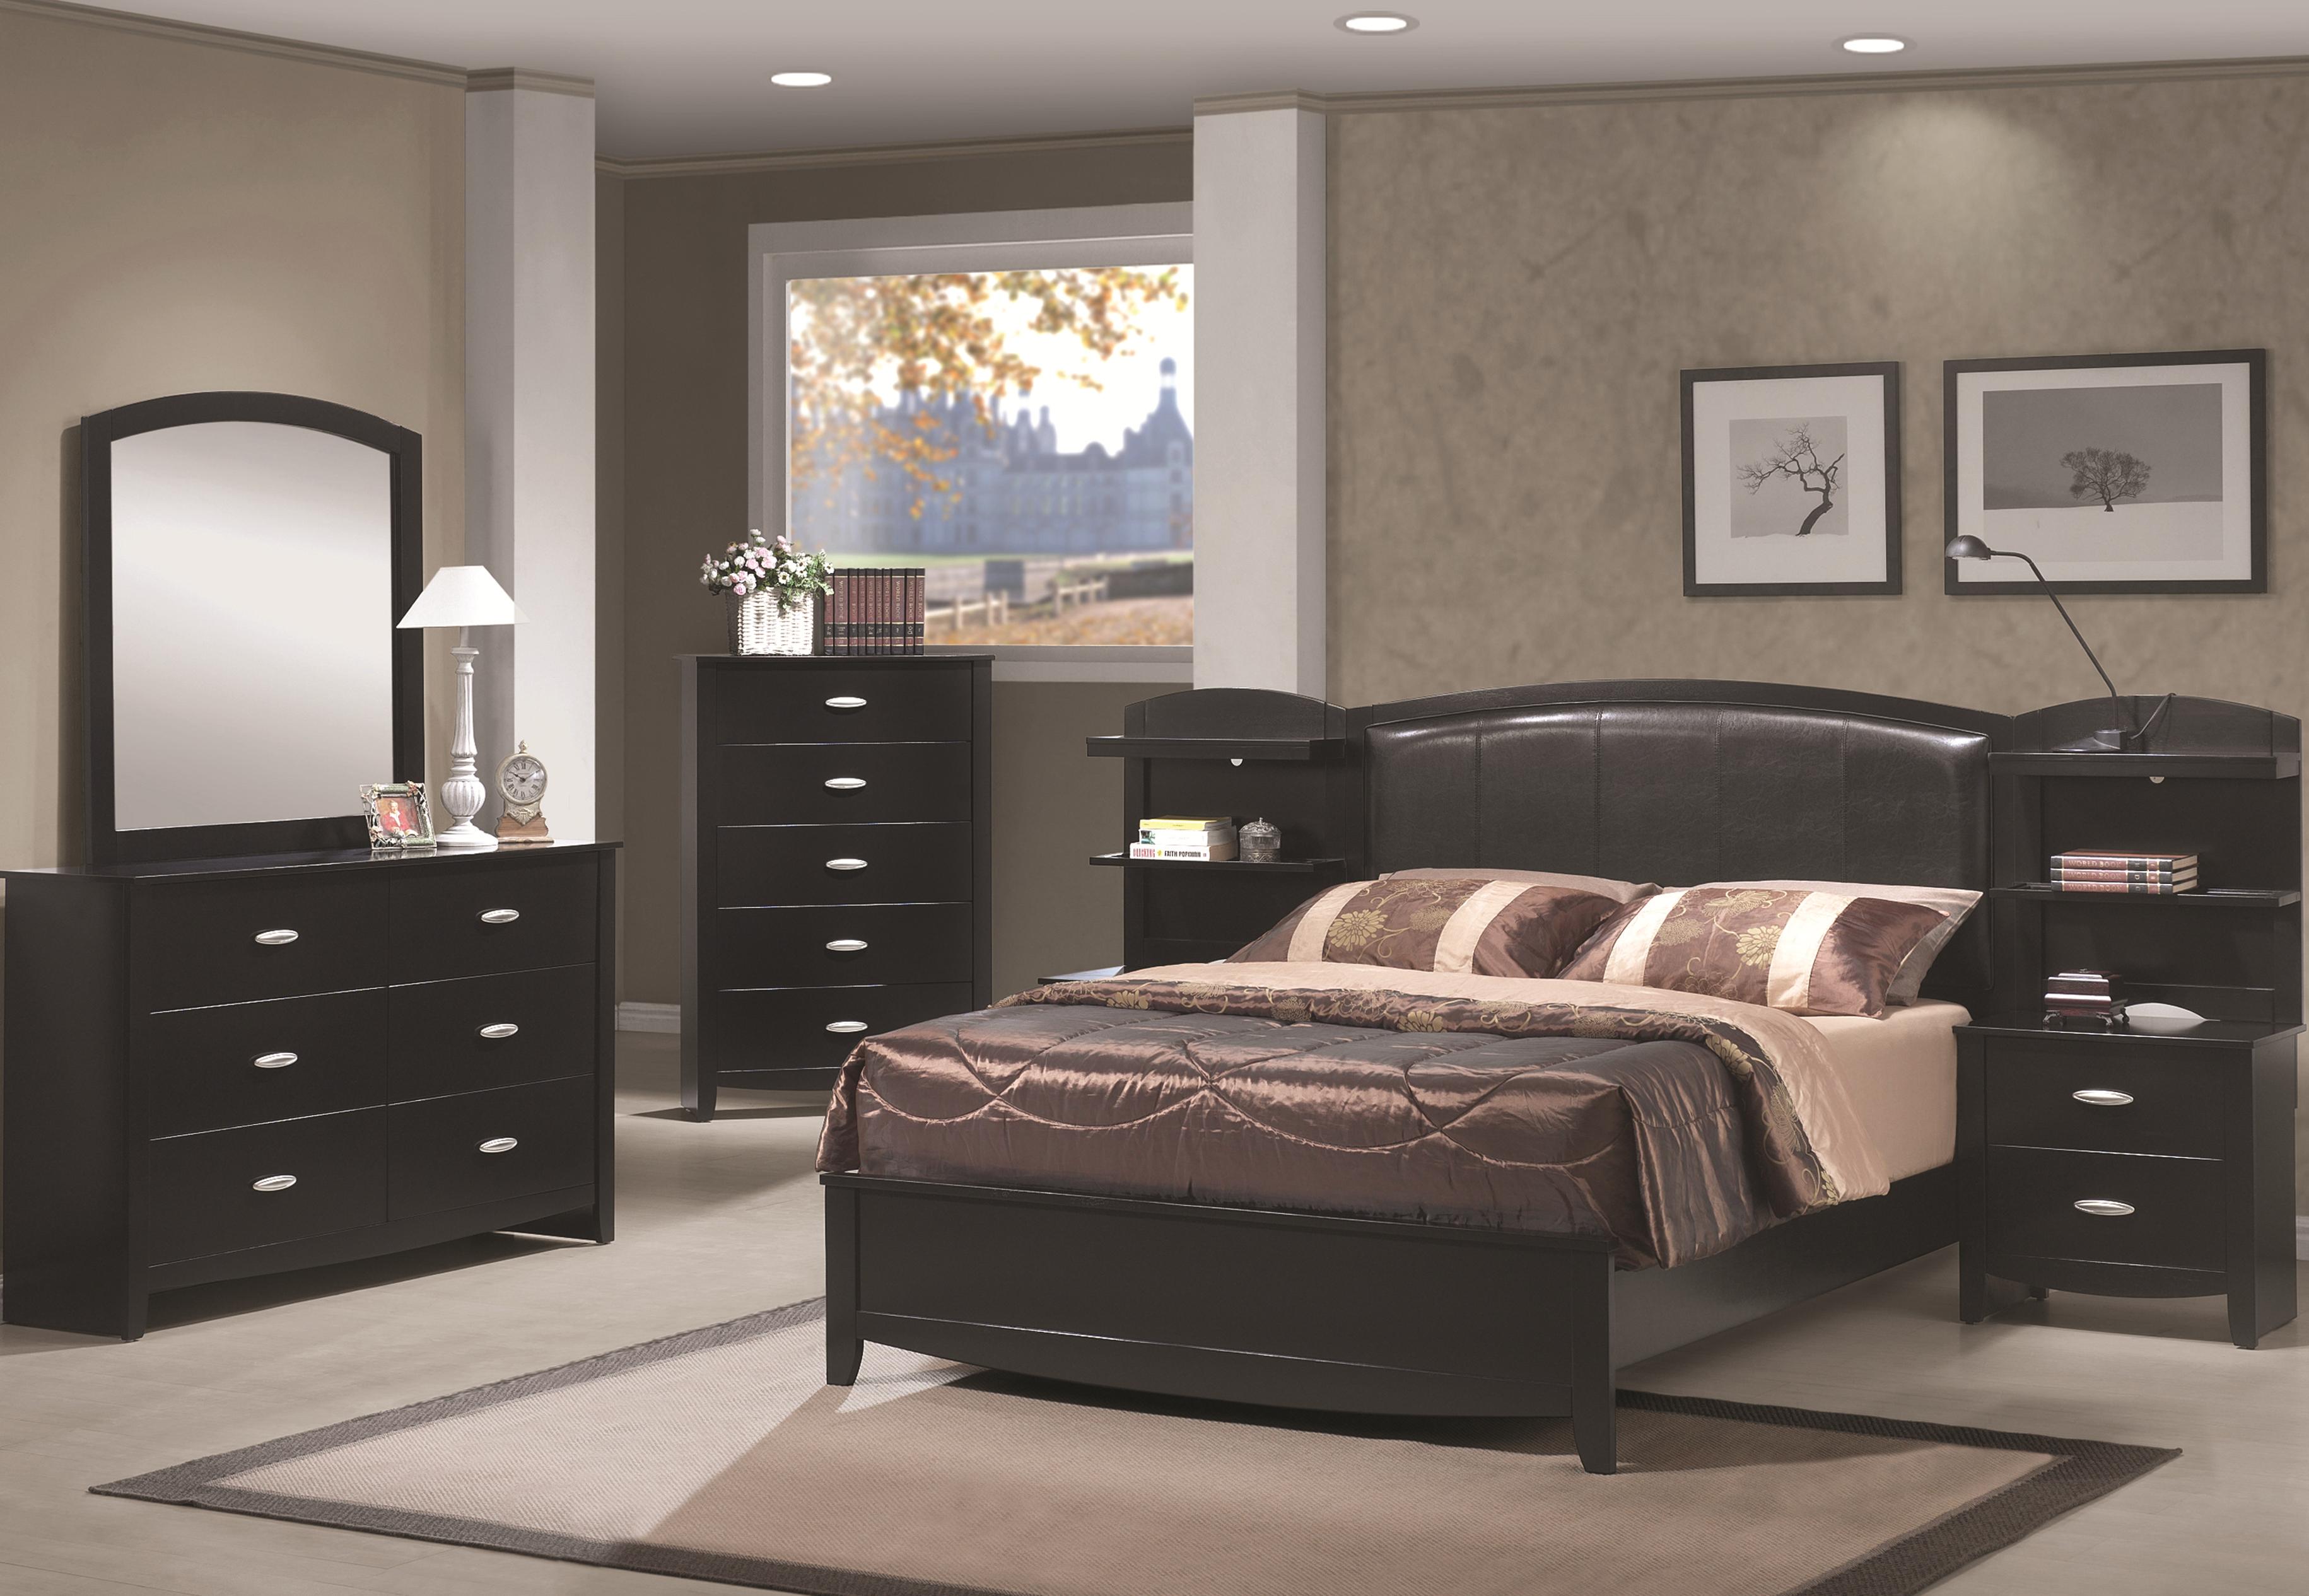 Bedroom Furniture Houston Texas Youth â€“ Bedroom Decor Ideas